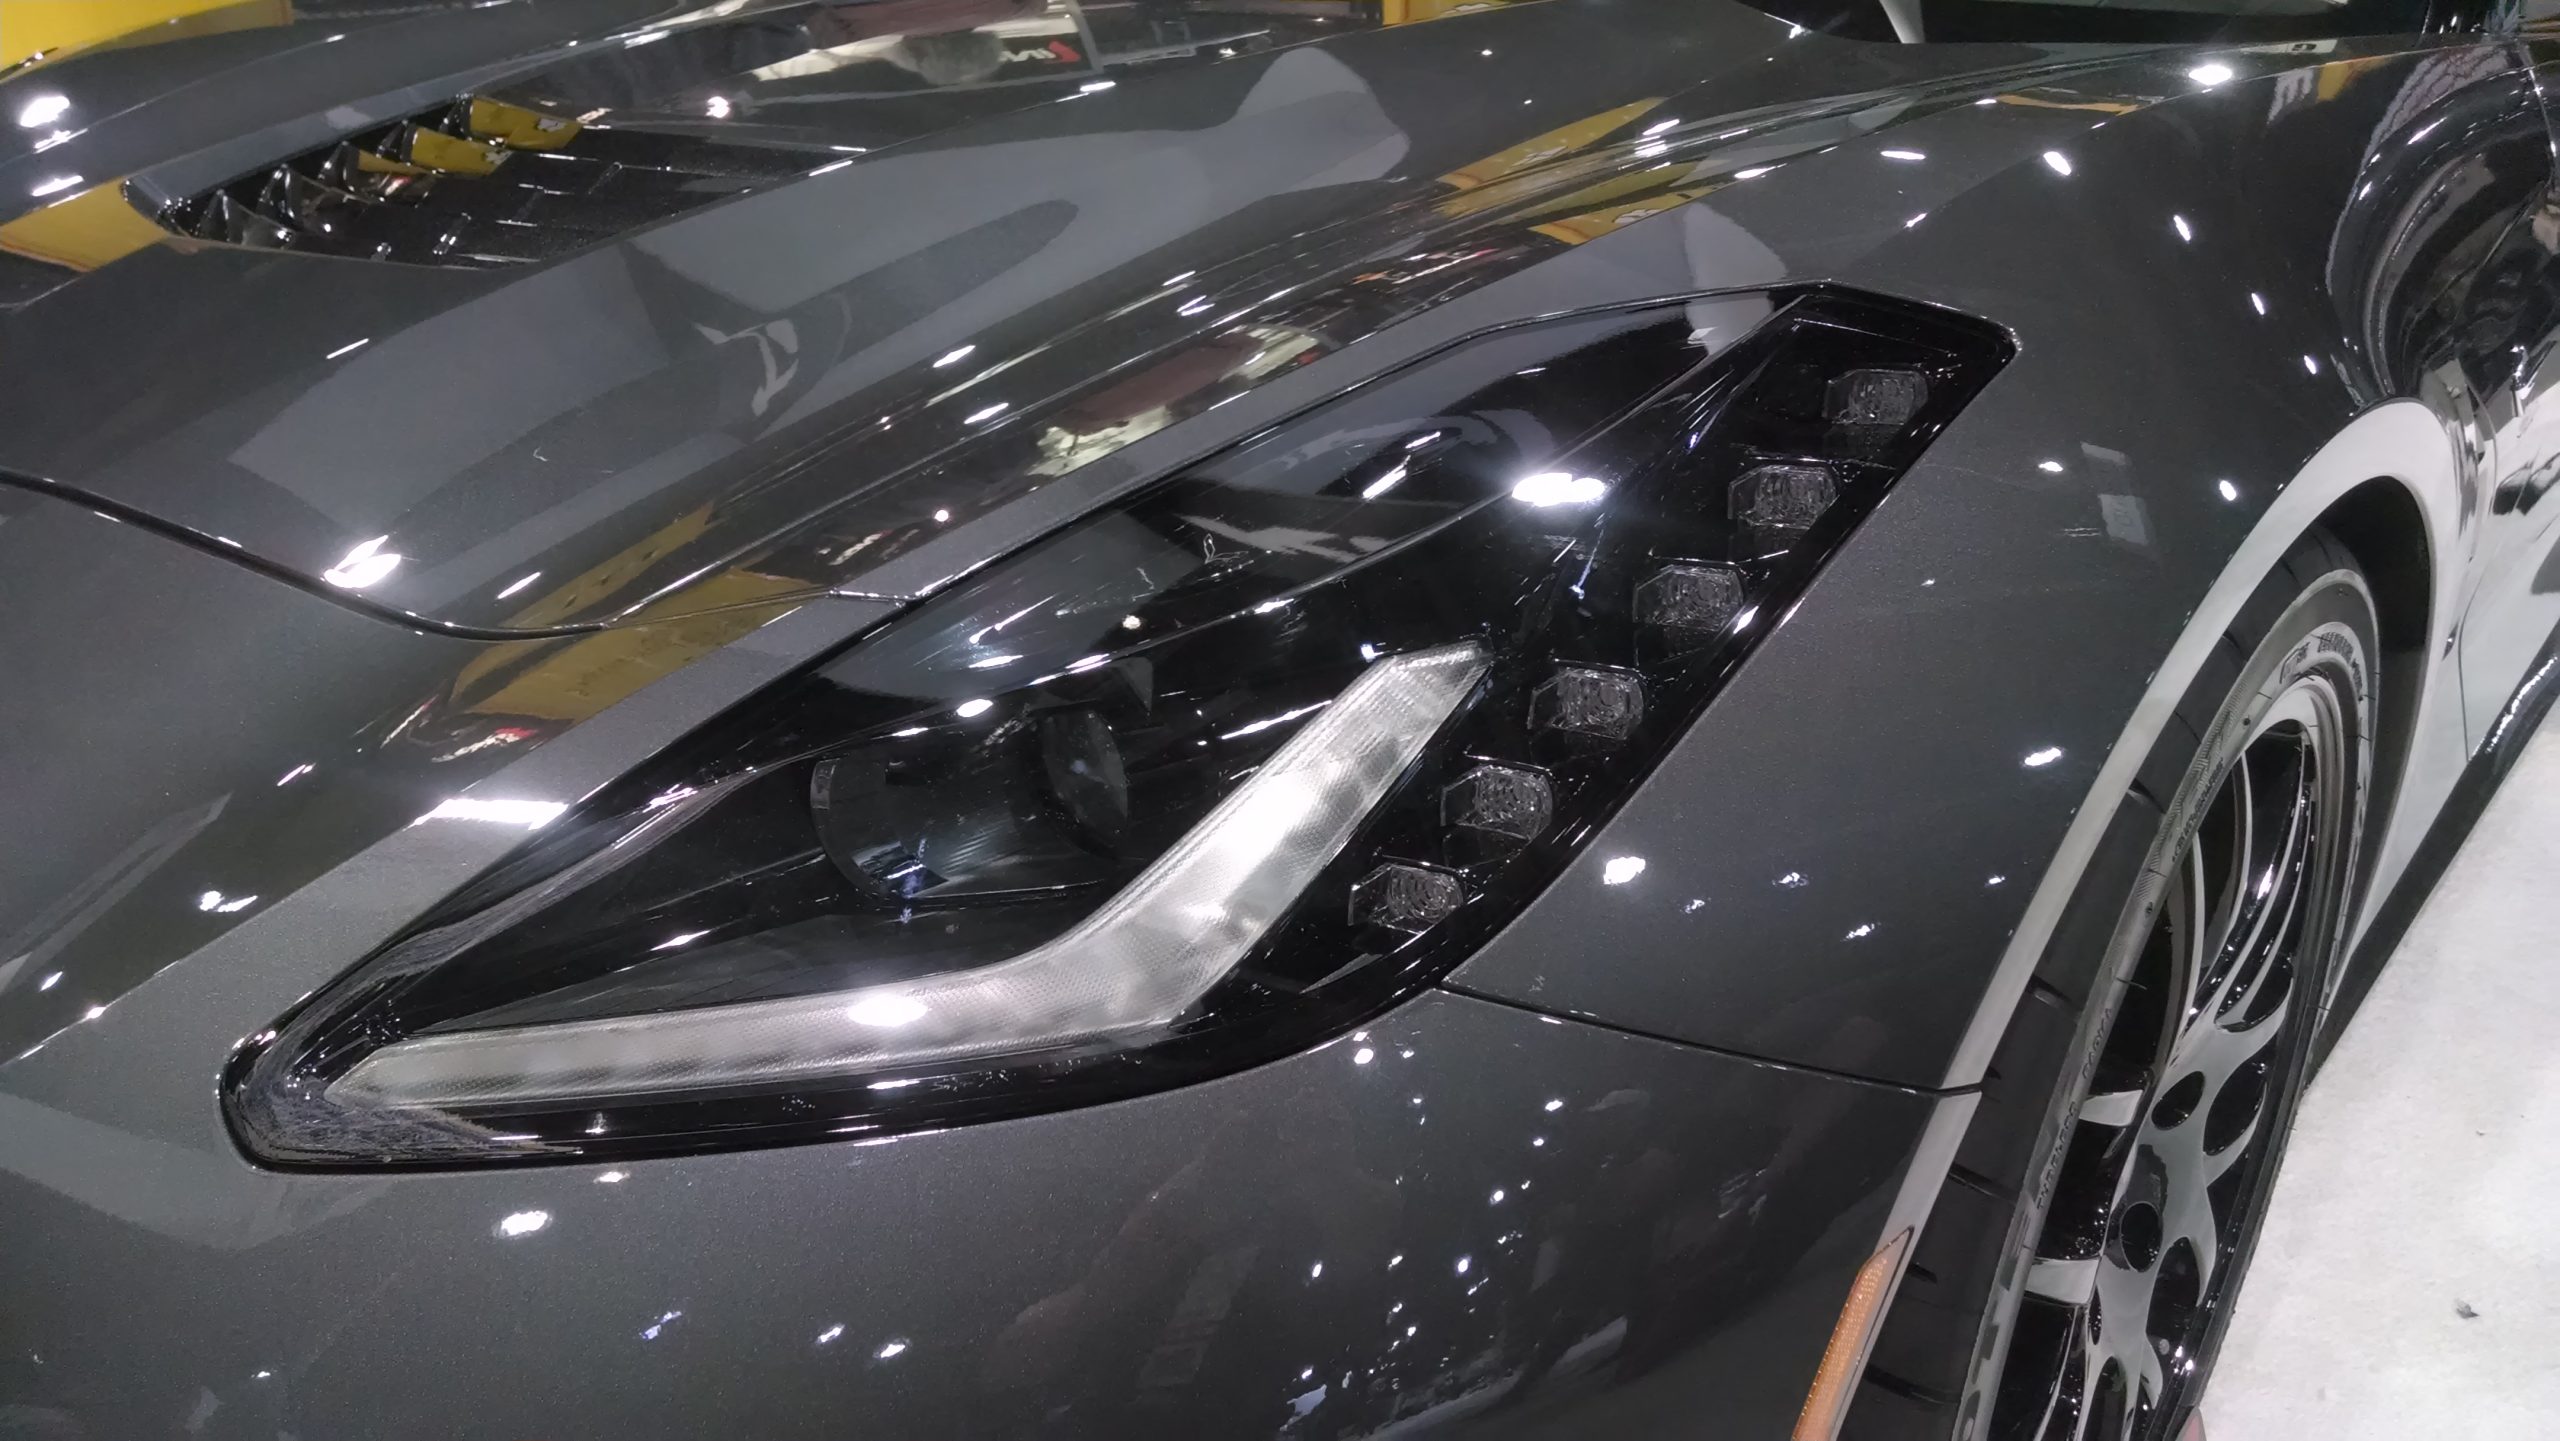 LED and Bi-Xenon light array for the C7 Corvette